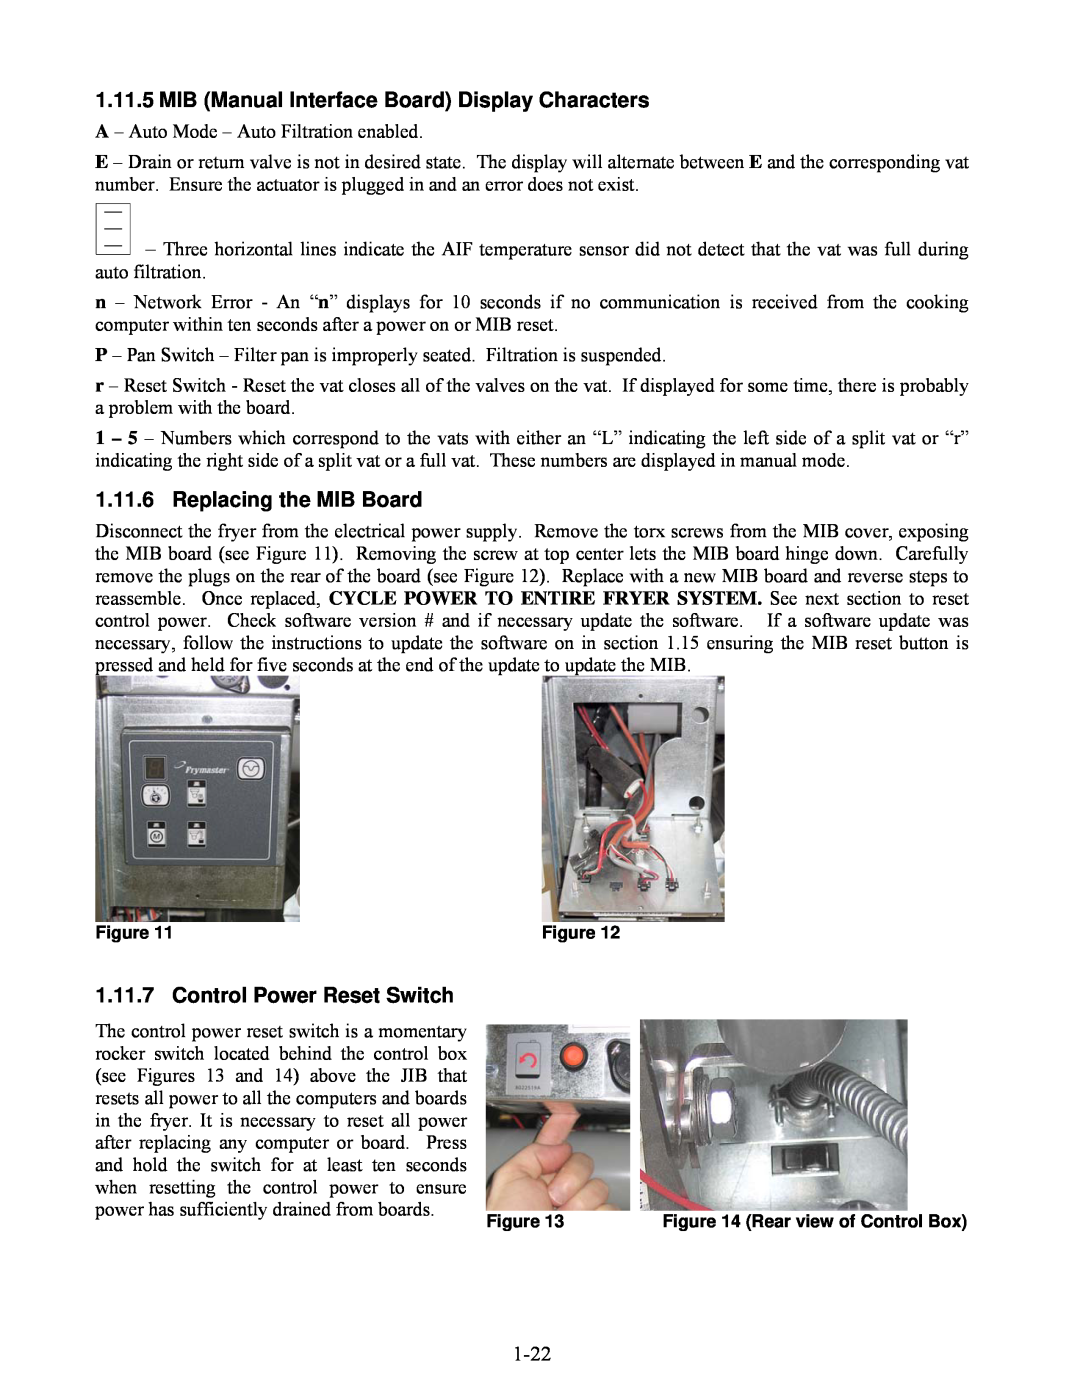 Frymaster BIELA14 manual Replacing the MIB Board, Control Power Reset Switch 